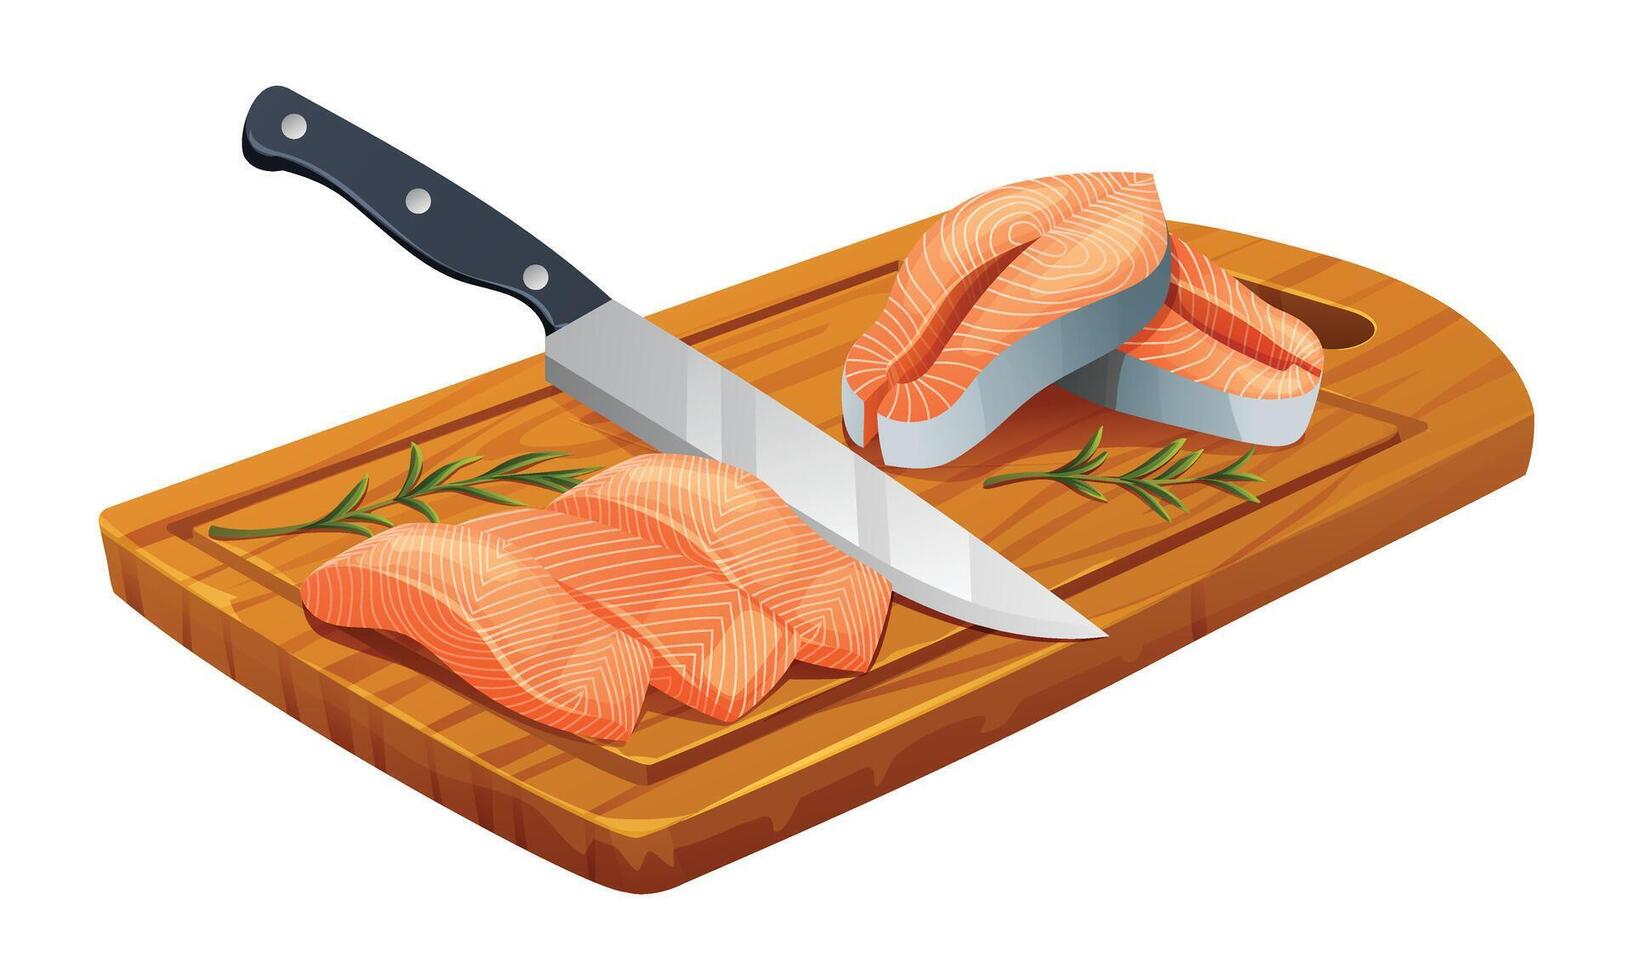 Fresco crudo salmón pescado filetes y filetes con cuchillo en corte tablero. vector ilustración aislado en blanco antecedentes